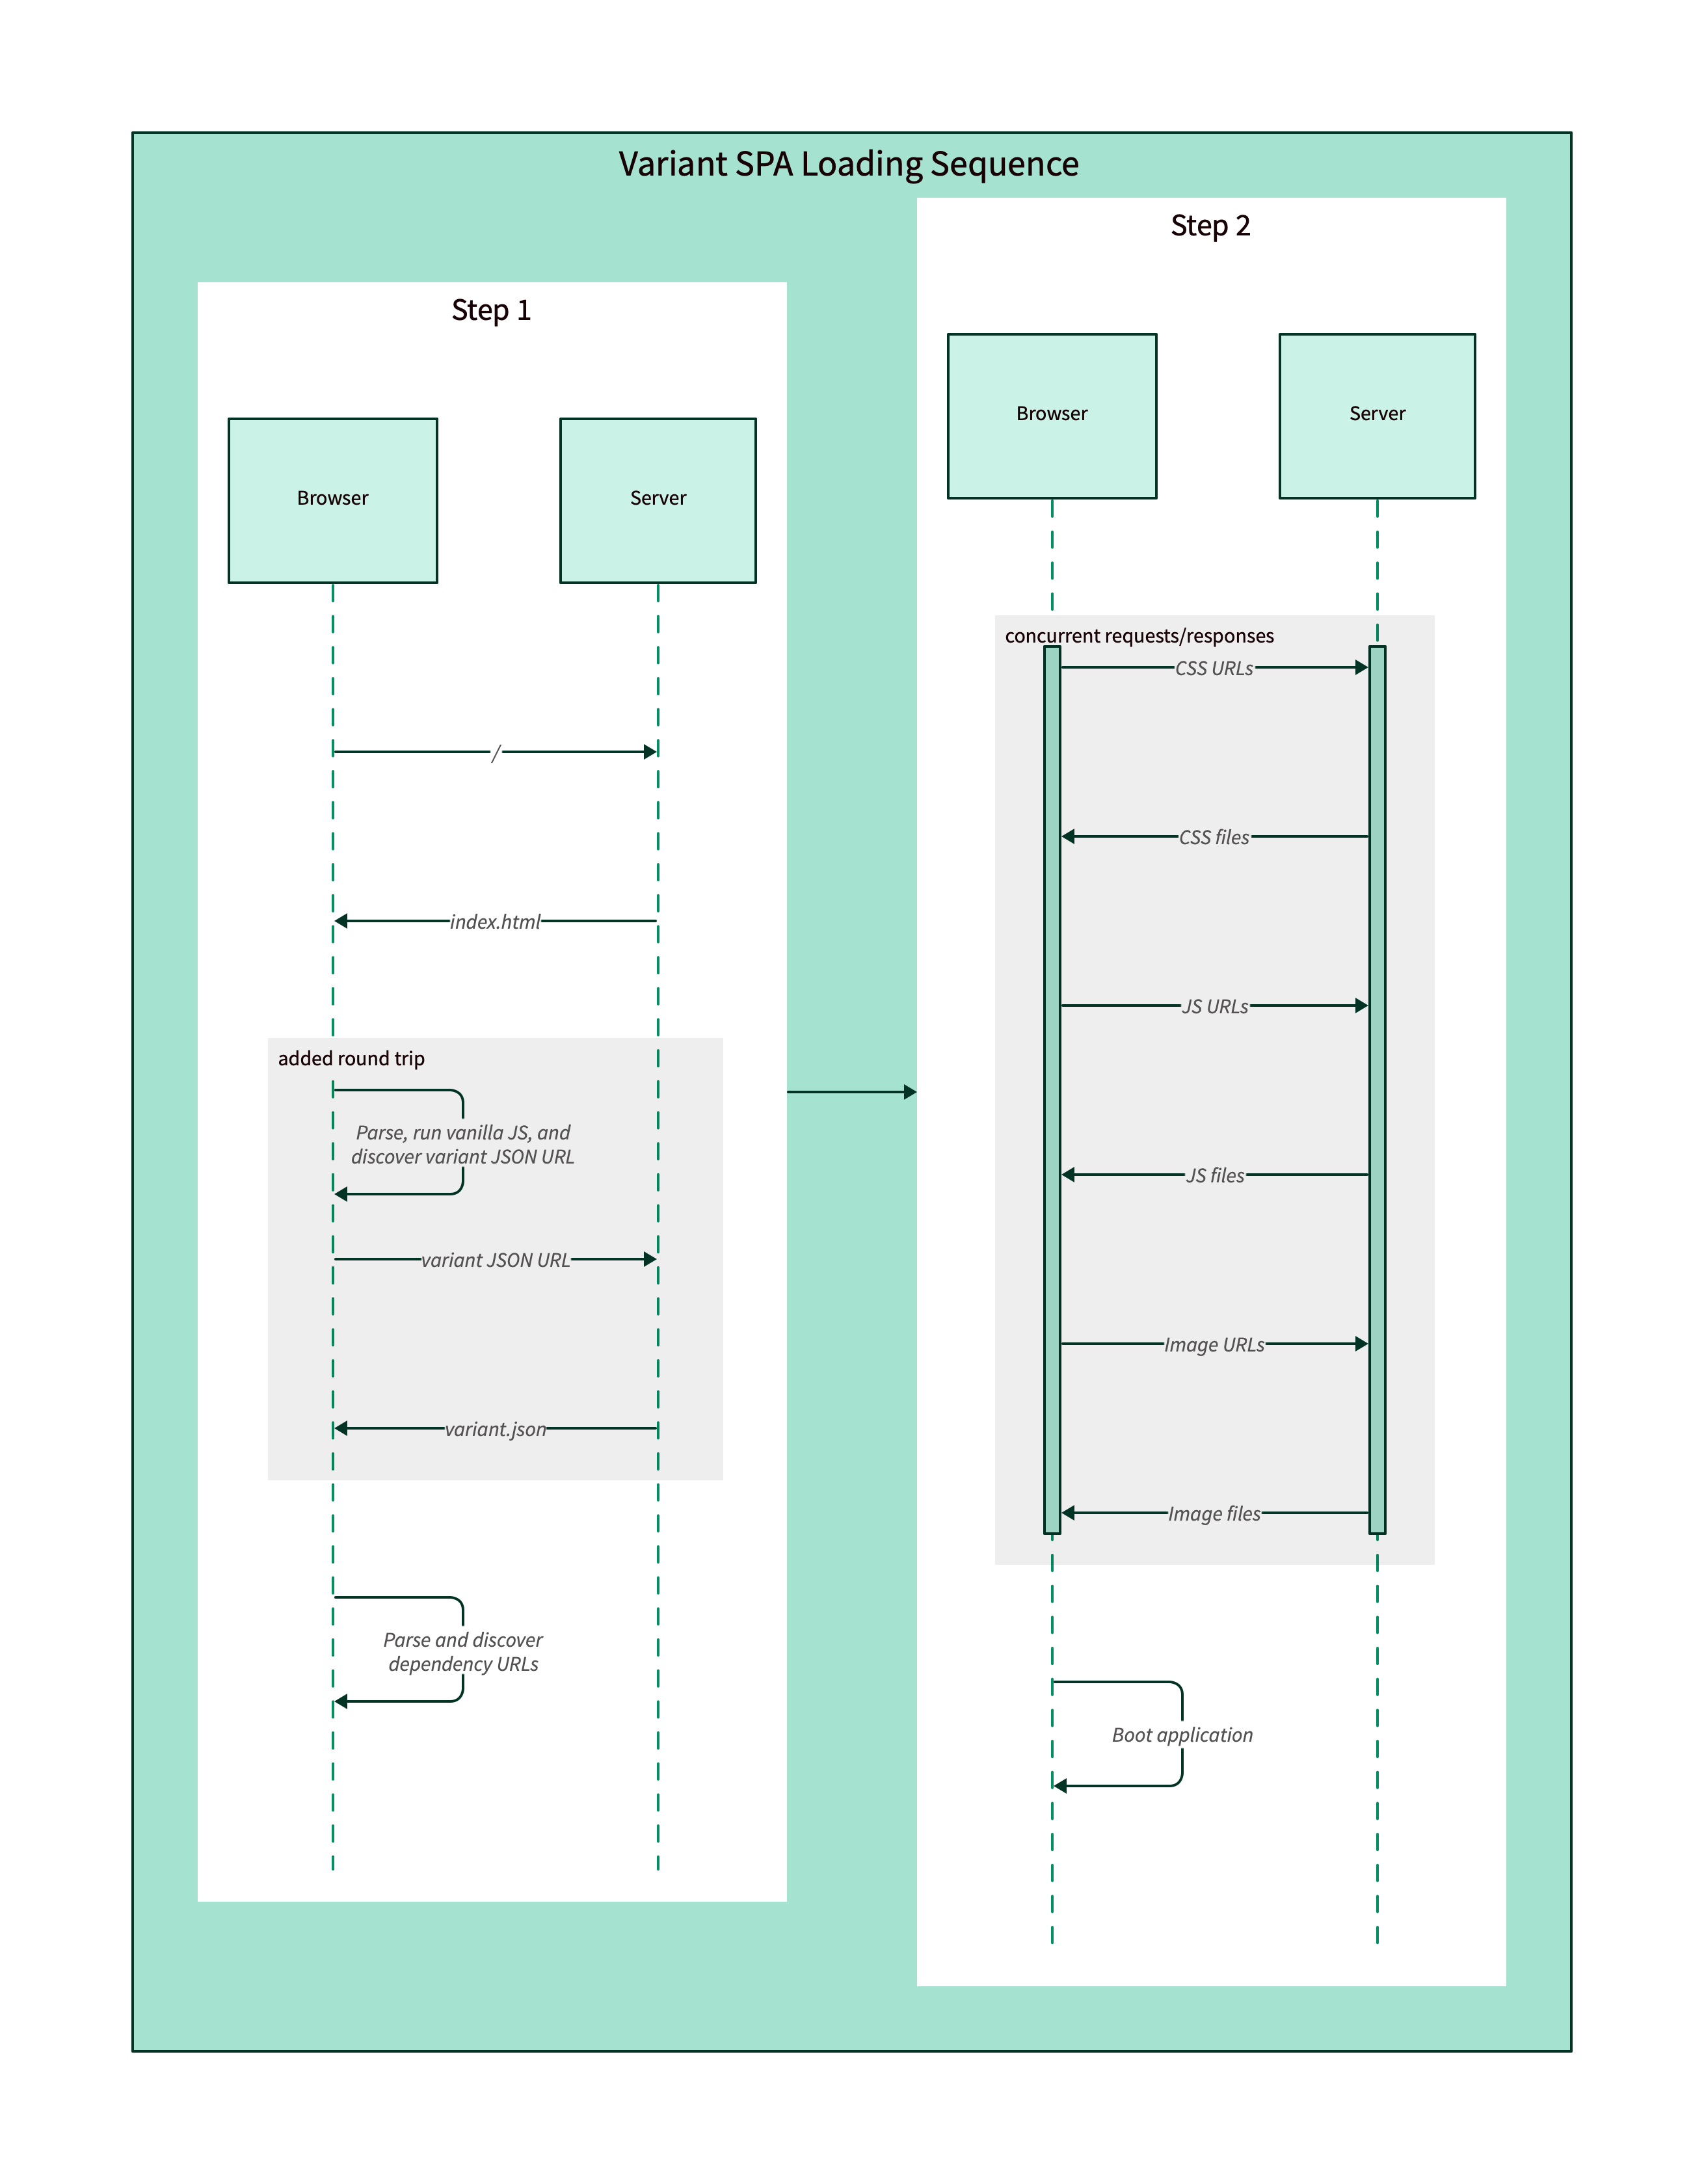 Sequence diagram of modified "variant" SPA architecture page load https://play.d2lang.com/?script=rJPBTsMwDIbvfQo_wOg0jj0gMU5UE0xEcJqETGNGUOcEJx0gtHdHadZuYwz1wKlR8vnLH1vt21eAxNdnDygGOYCaX8LMoja8BEVvDXFFBXxlACqQg0laA7TvLMBvkUdtcCm4as-exL57kgKmaZEKSNZxT7XffQ7OLvrT8R4b93uVYU0f-UtY1S2BWpMGsQ1rCGJcF-tA2hfPUTyNQBqGNbKpa4RSjQBZL1gbX9l423rbgVLd3sD93ezY14U8Qf6Sekvmr95yS21-PvwwY4wEXaIFa3LEmrj6jNf4LNZ3kzj_z0lUlqtGhDiARI8PfizknWVP_qi3edh1Iw8FXCnV5dv5E9RXJOrZ1OT_lpVDXOUg1fUKlzTAlrid8PSQptYGQOdqU2H8ew4mMolomk22yb4DAAD__w%3D%3D&sketch=0&theme=104